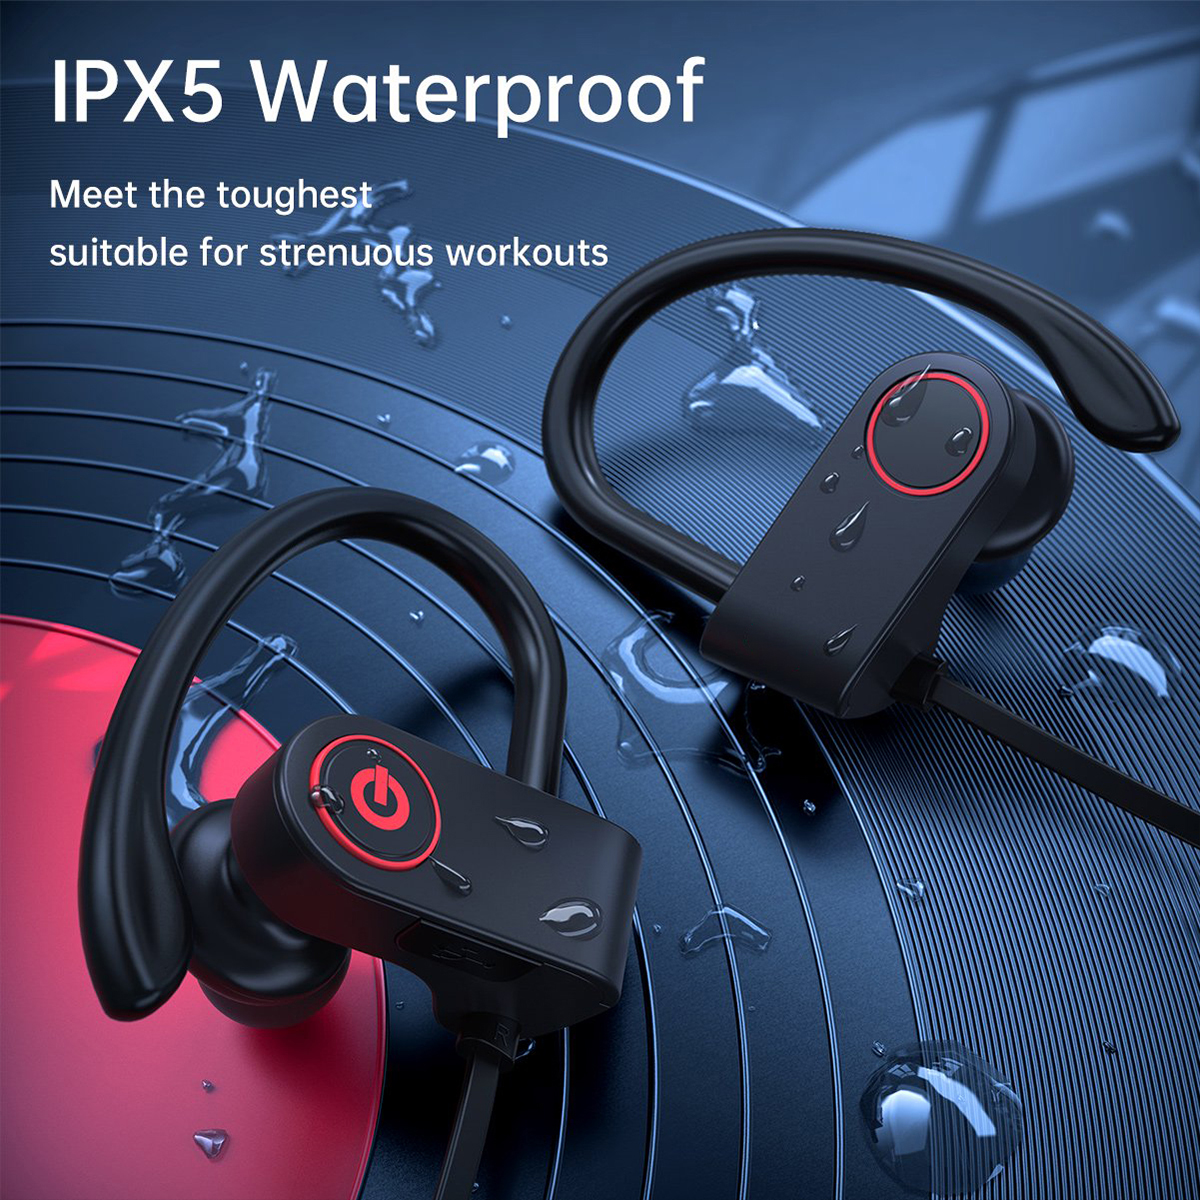 Bluetooth Headphones, Best Wireless Sports Earphones w/Mic IPX7 Waterproof HD Stereo Sweatproof in-Ear Earbuds Gym Running Workout 8 Hour Battery Noise Cancelling Headsets - image 3 of 8